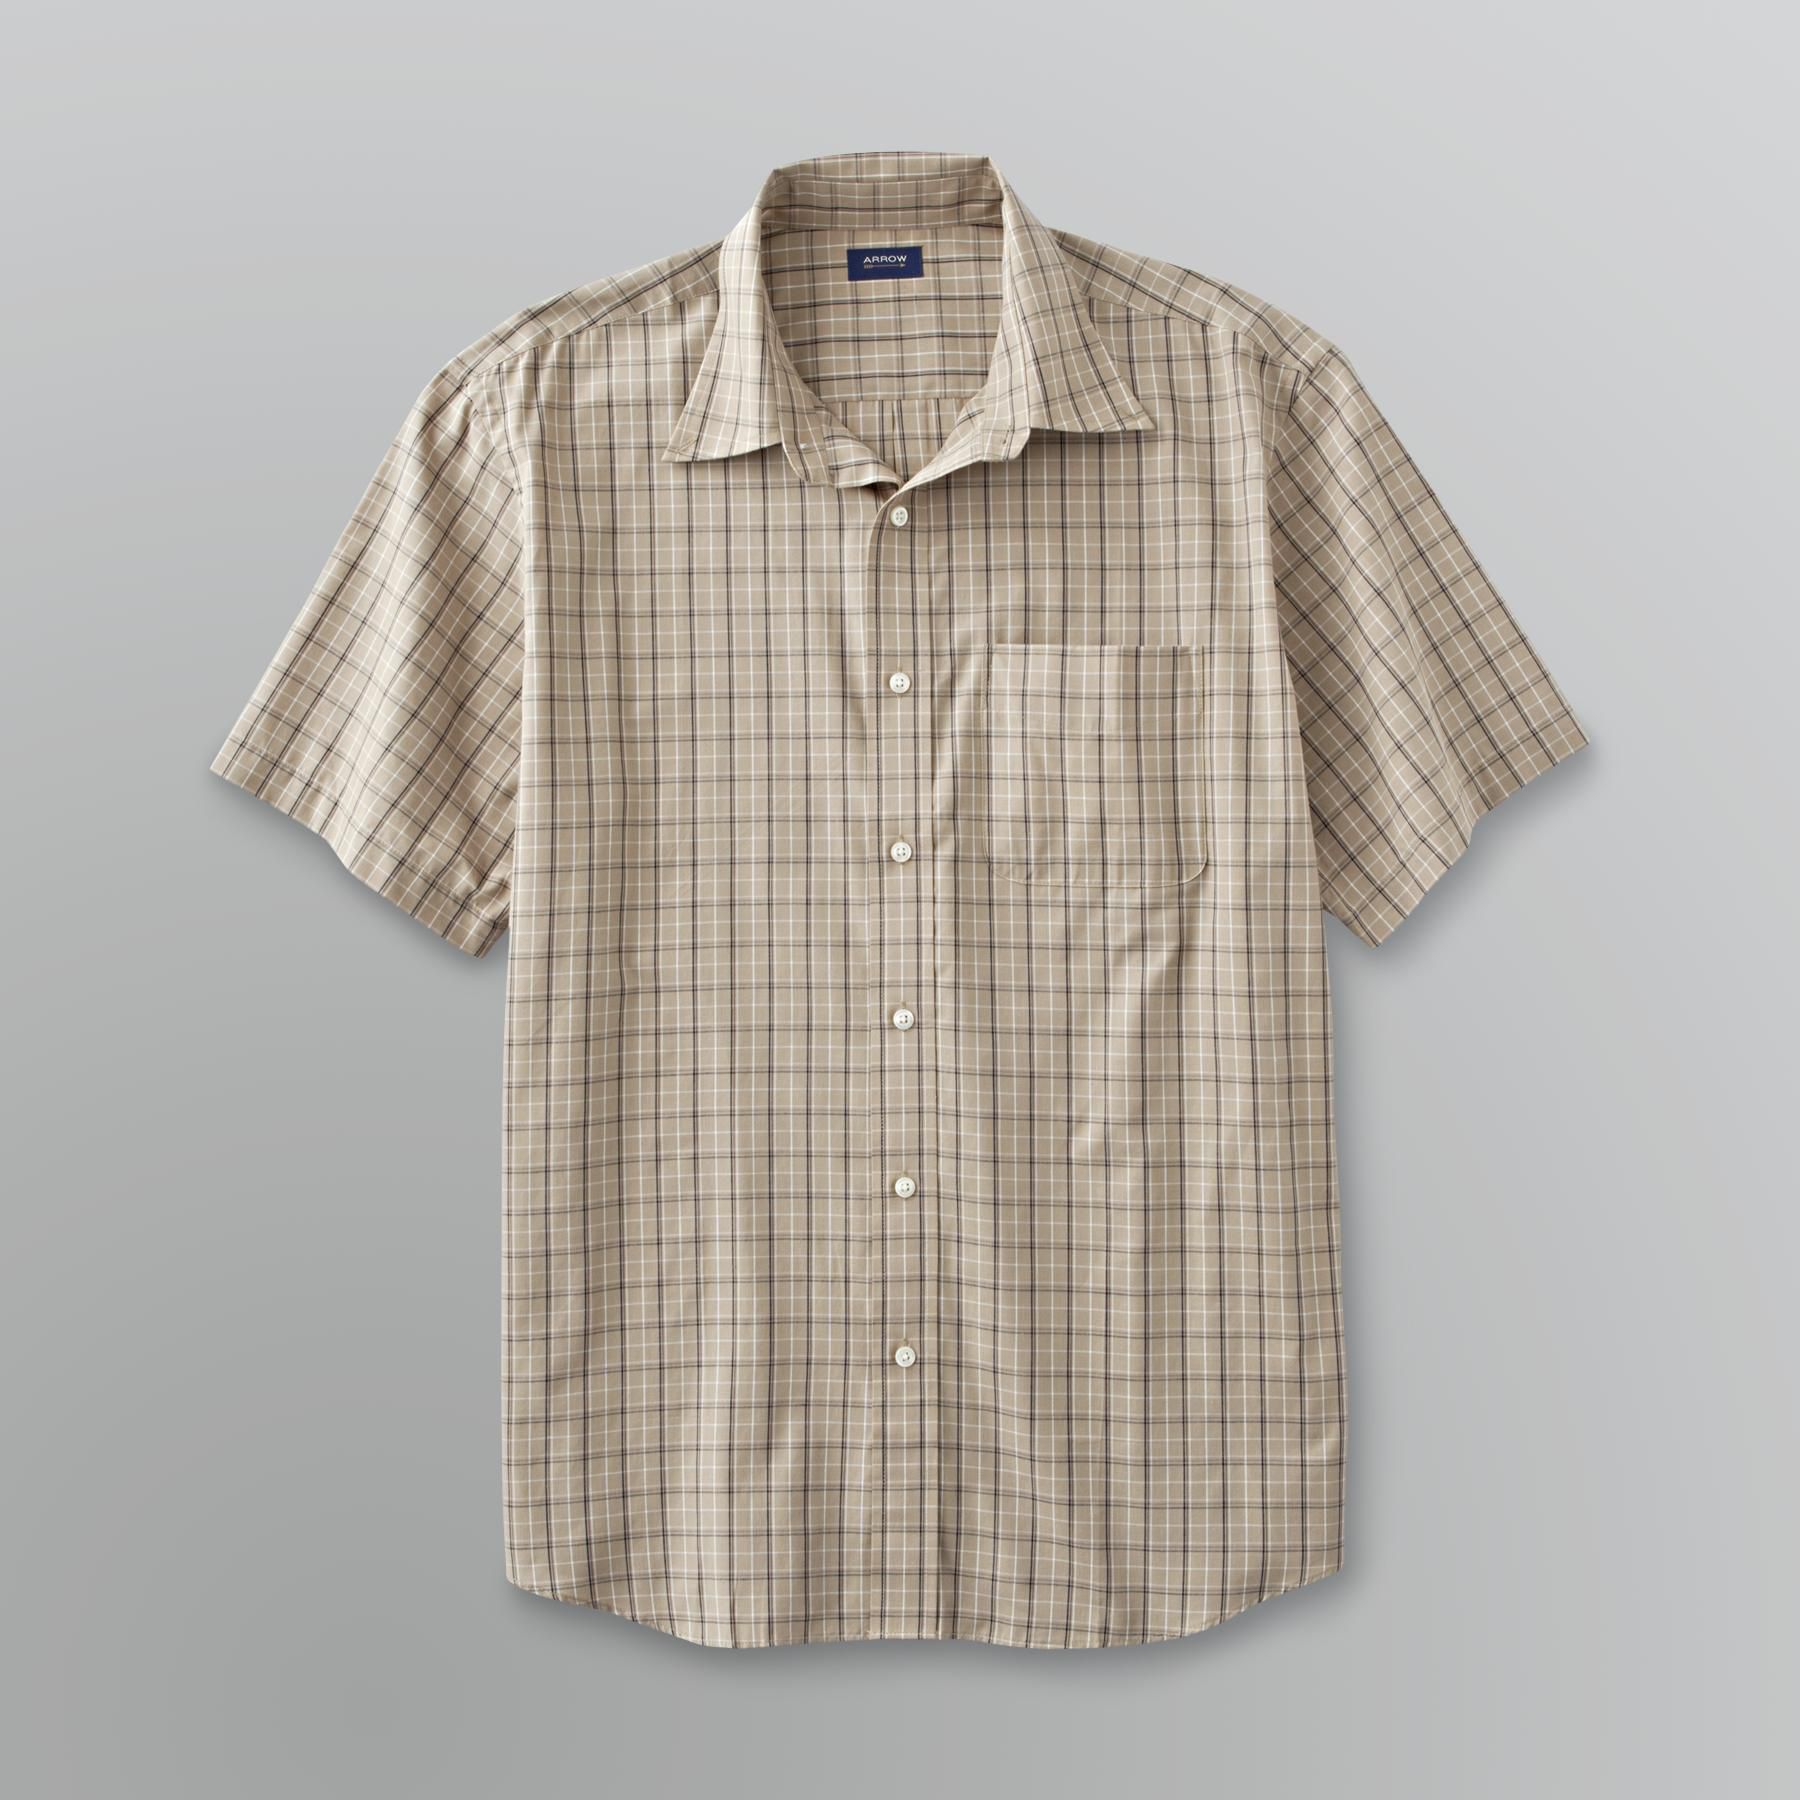 Arrow Men's Short Sleeve Plaid Shirt